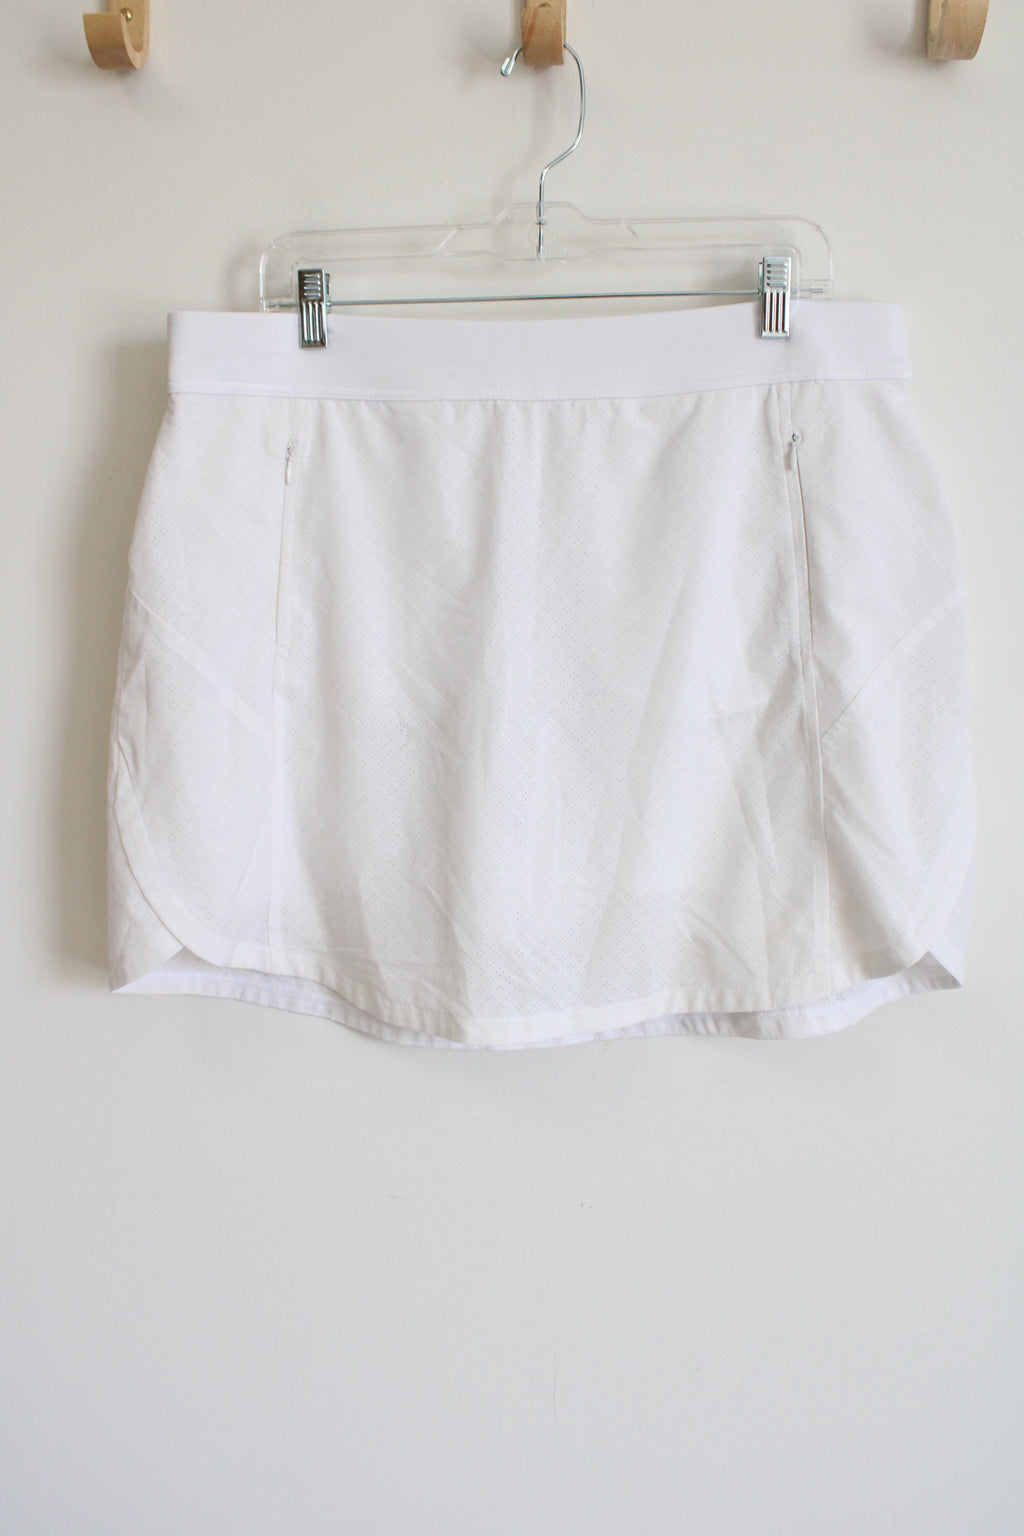 Callaway White Athletic Golf Skirt | XL